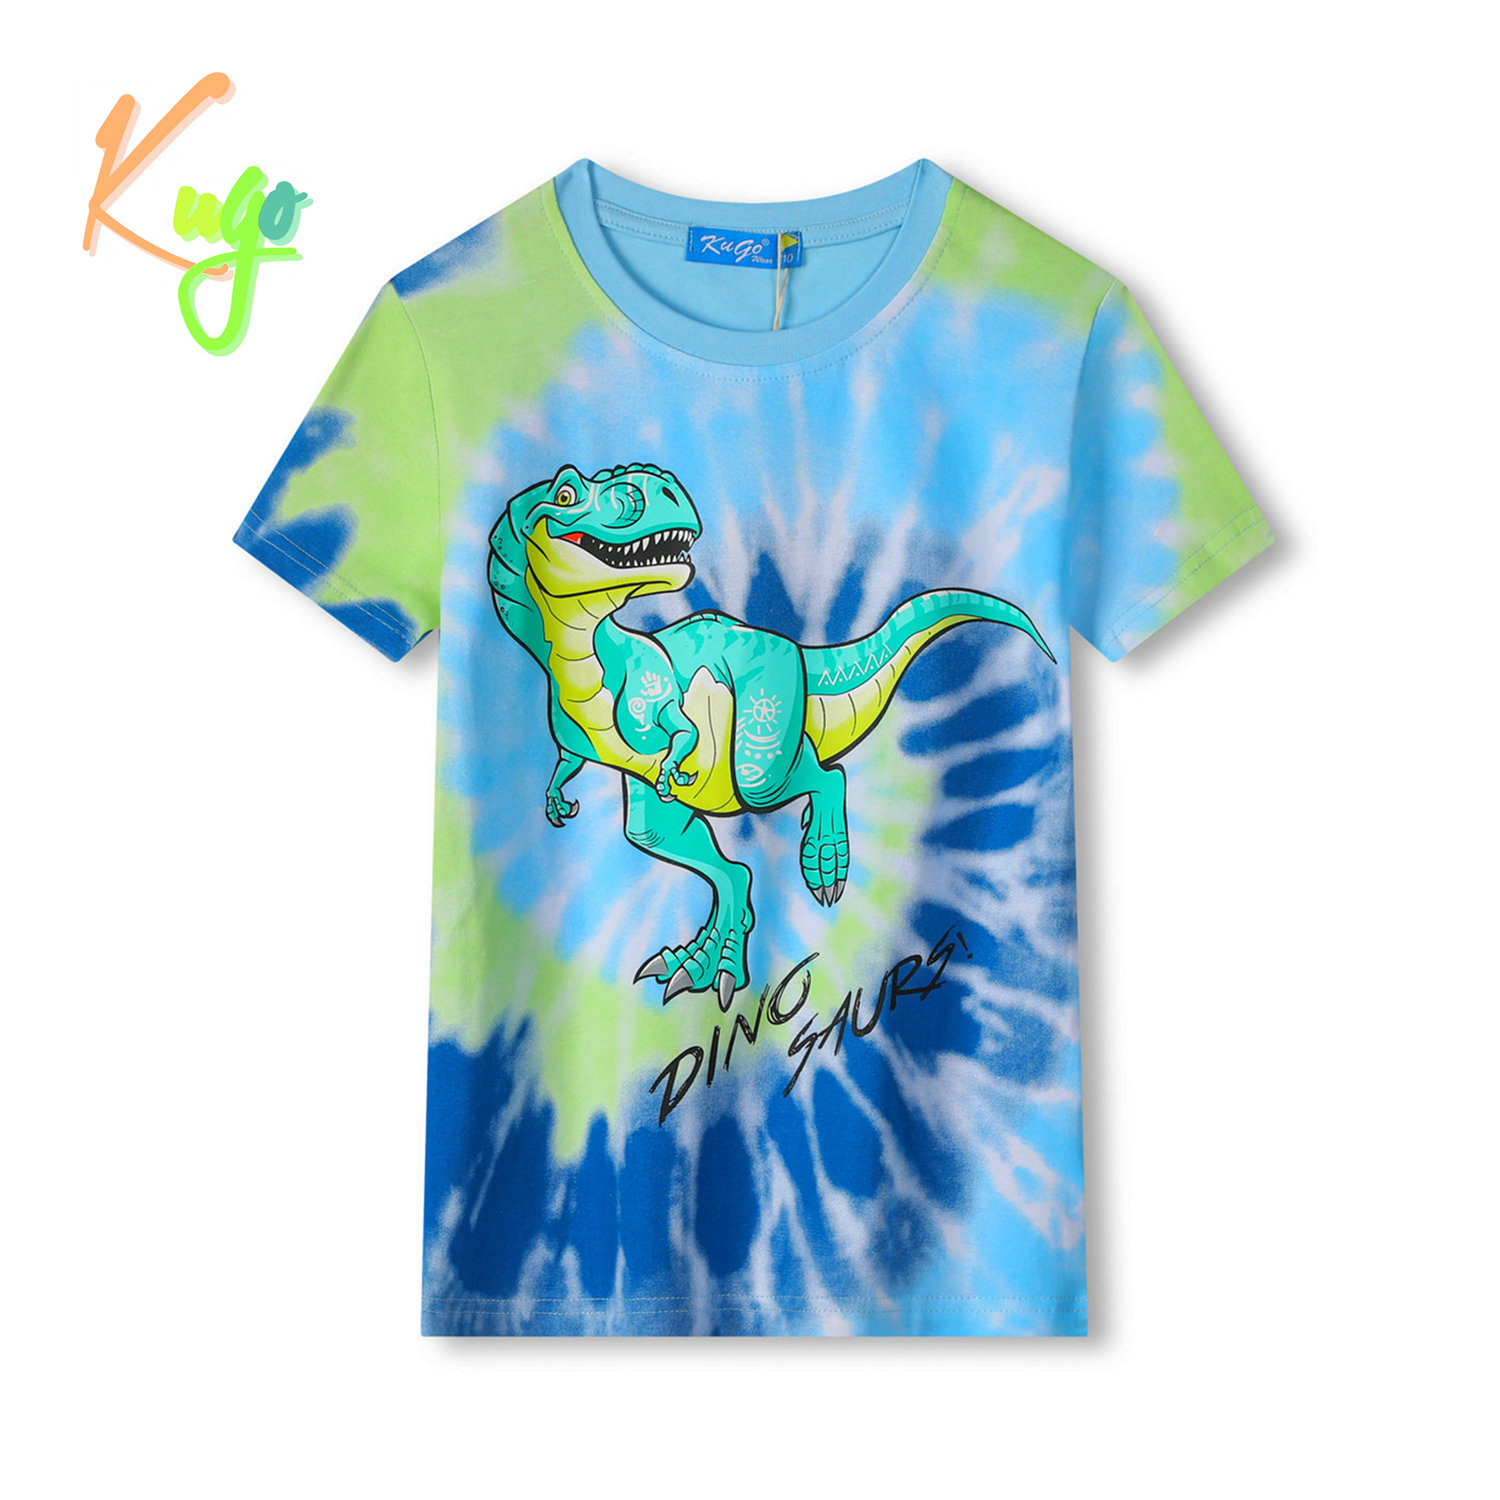 Chlapecké tričko - KUGO FC0301, modrá / zelený dinosaurus Barva: Modrá, Velikost: 98